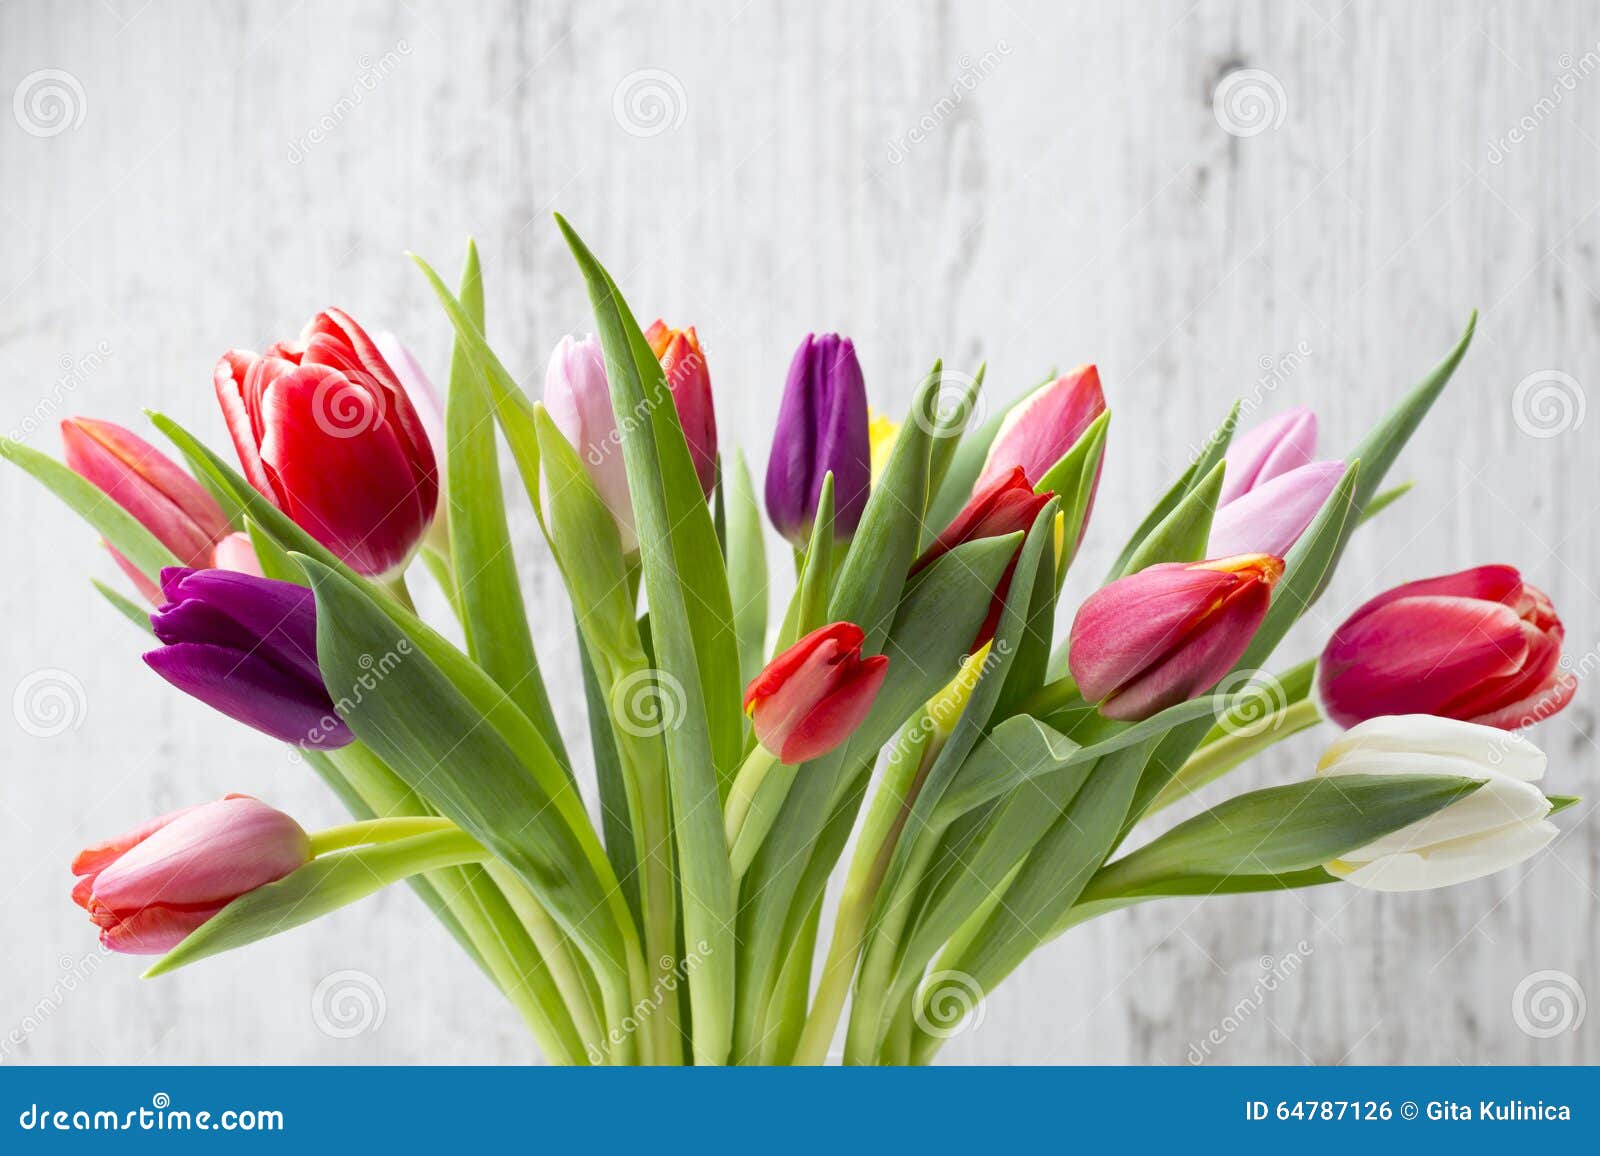 Tulips on the Grey Background Stock Photo - Image of purple, tulips ...